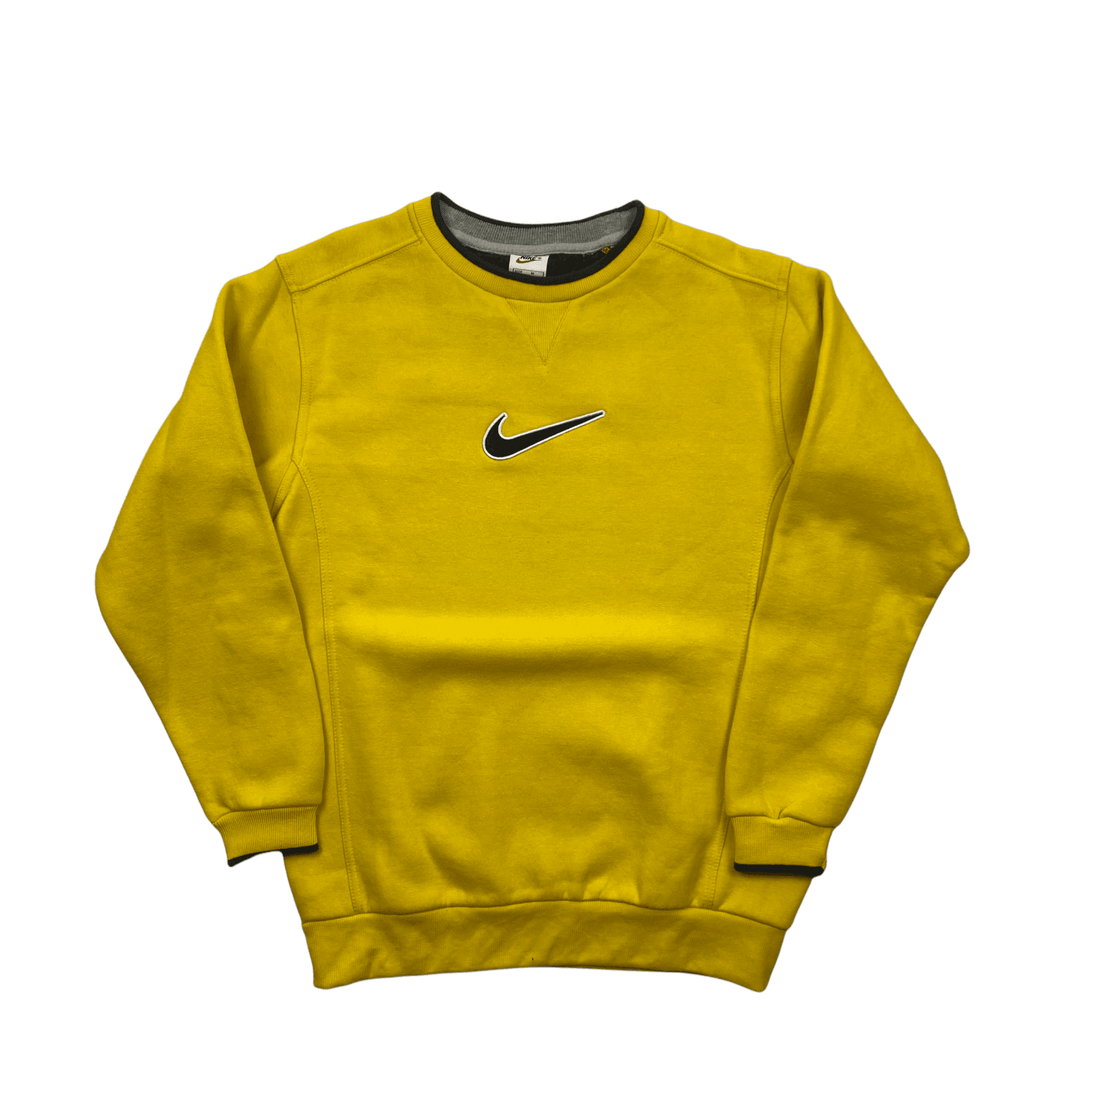 Vintage 90s Yellow Nike Large Centre Swoosh Sweatshirt - Medium - The Streetwear Studio